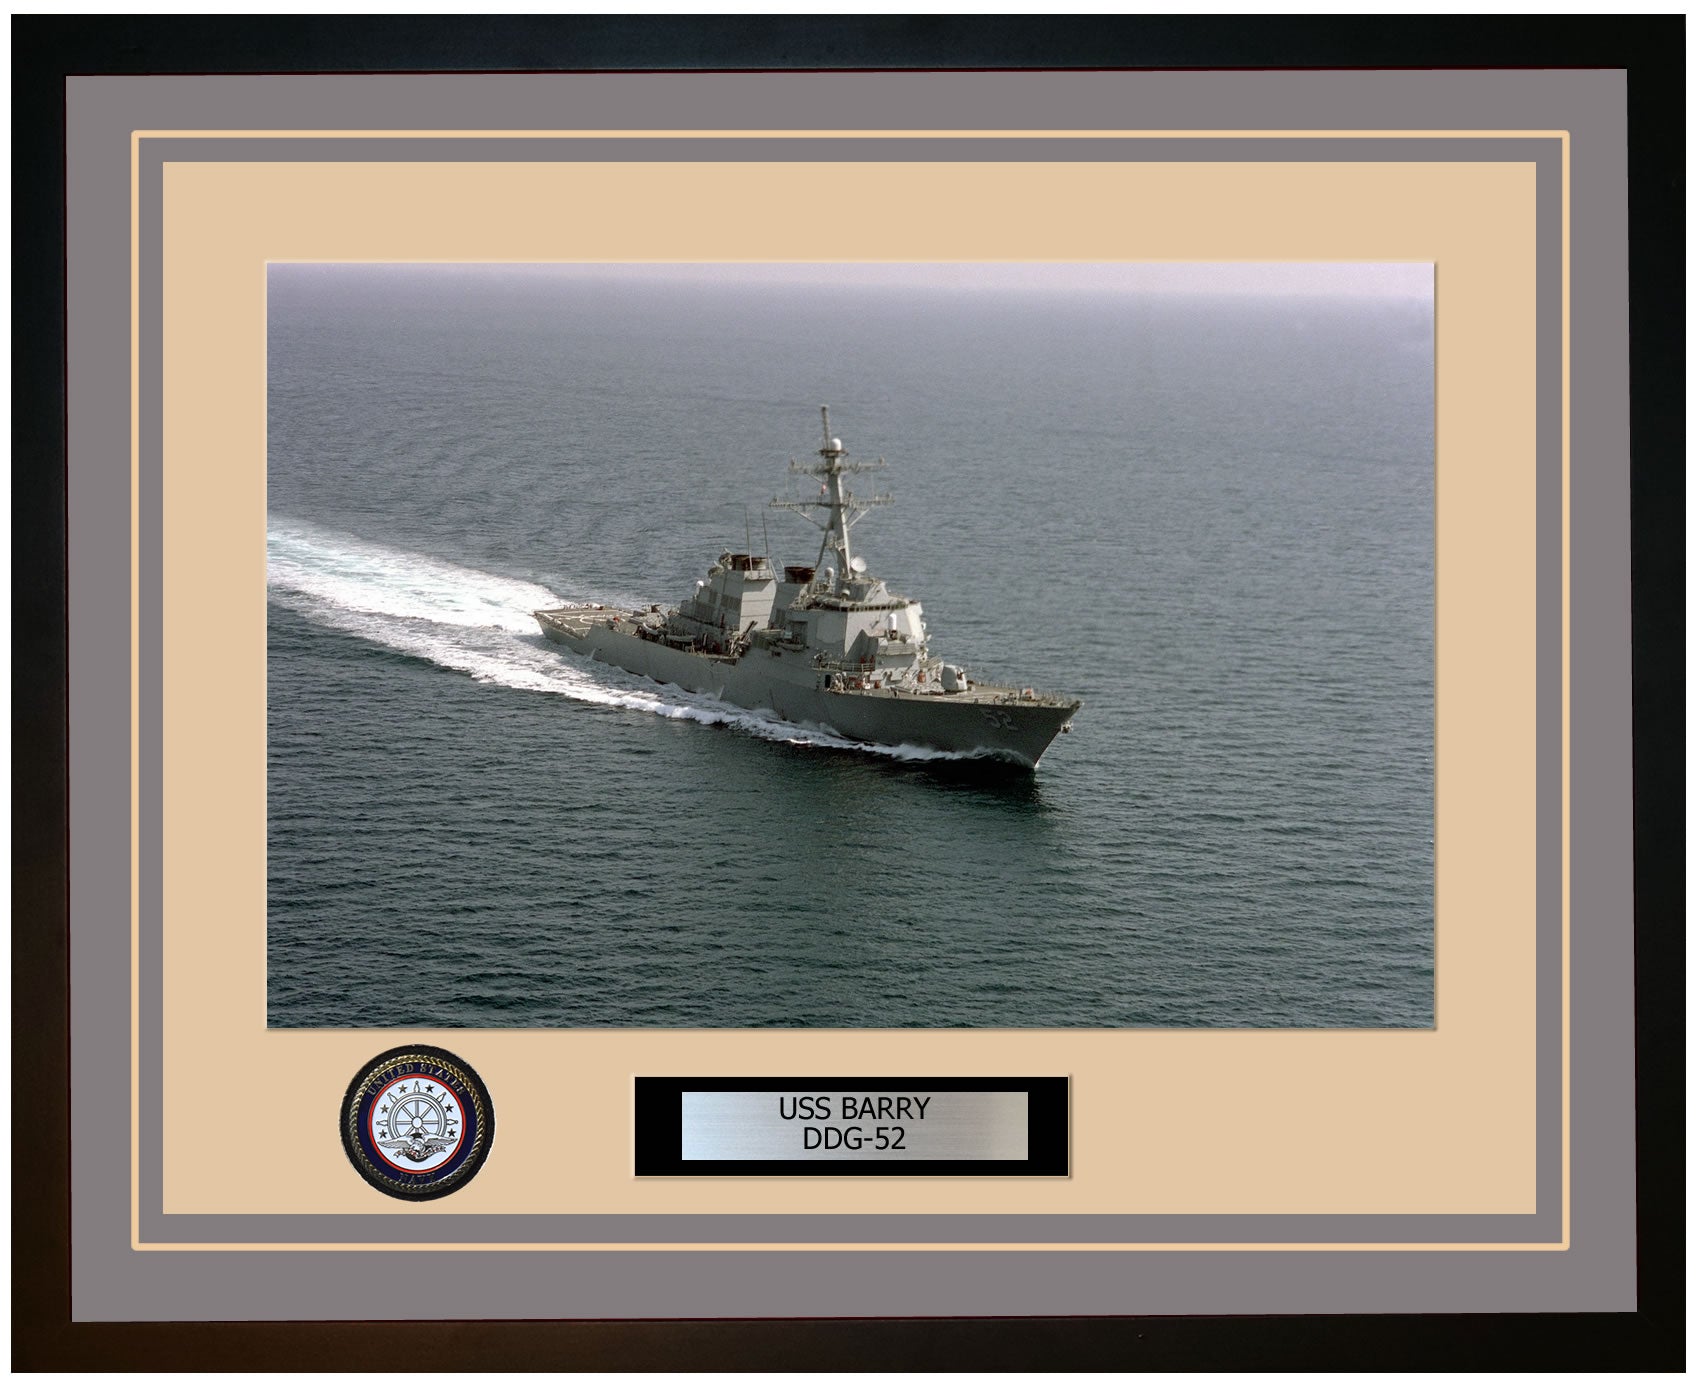 USS BARRY DDG-52 Framed Navy Ship Photo Grey